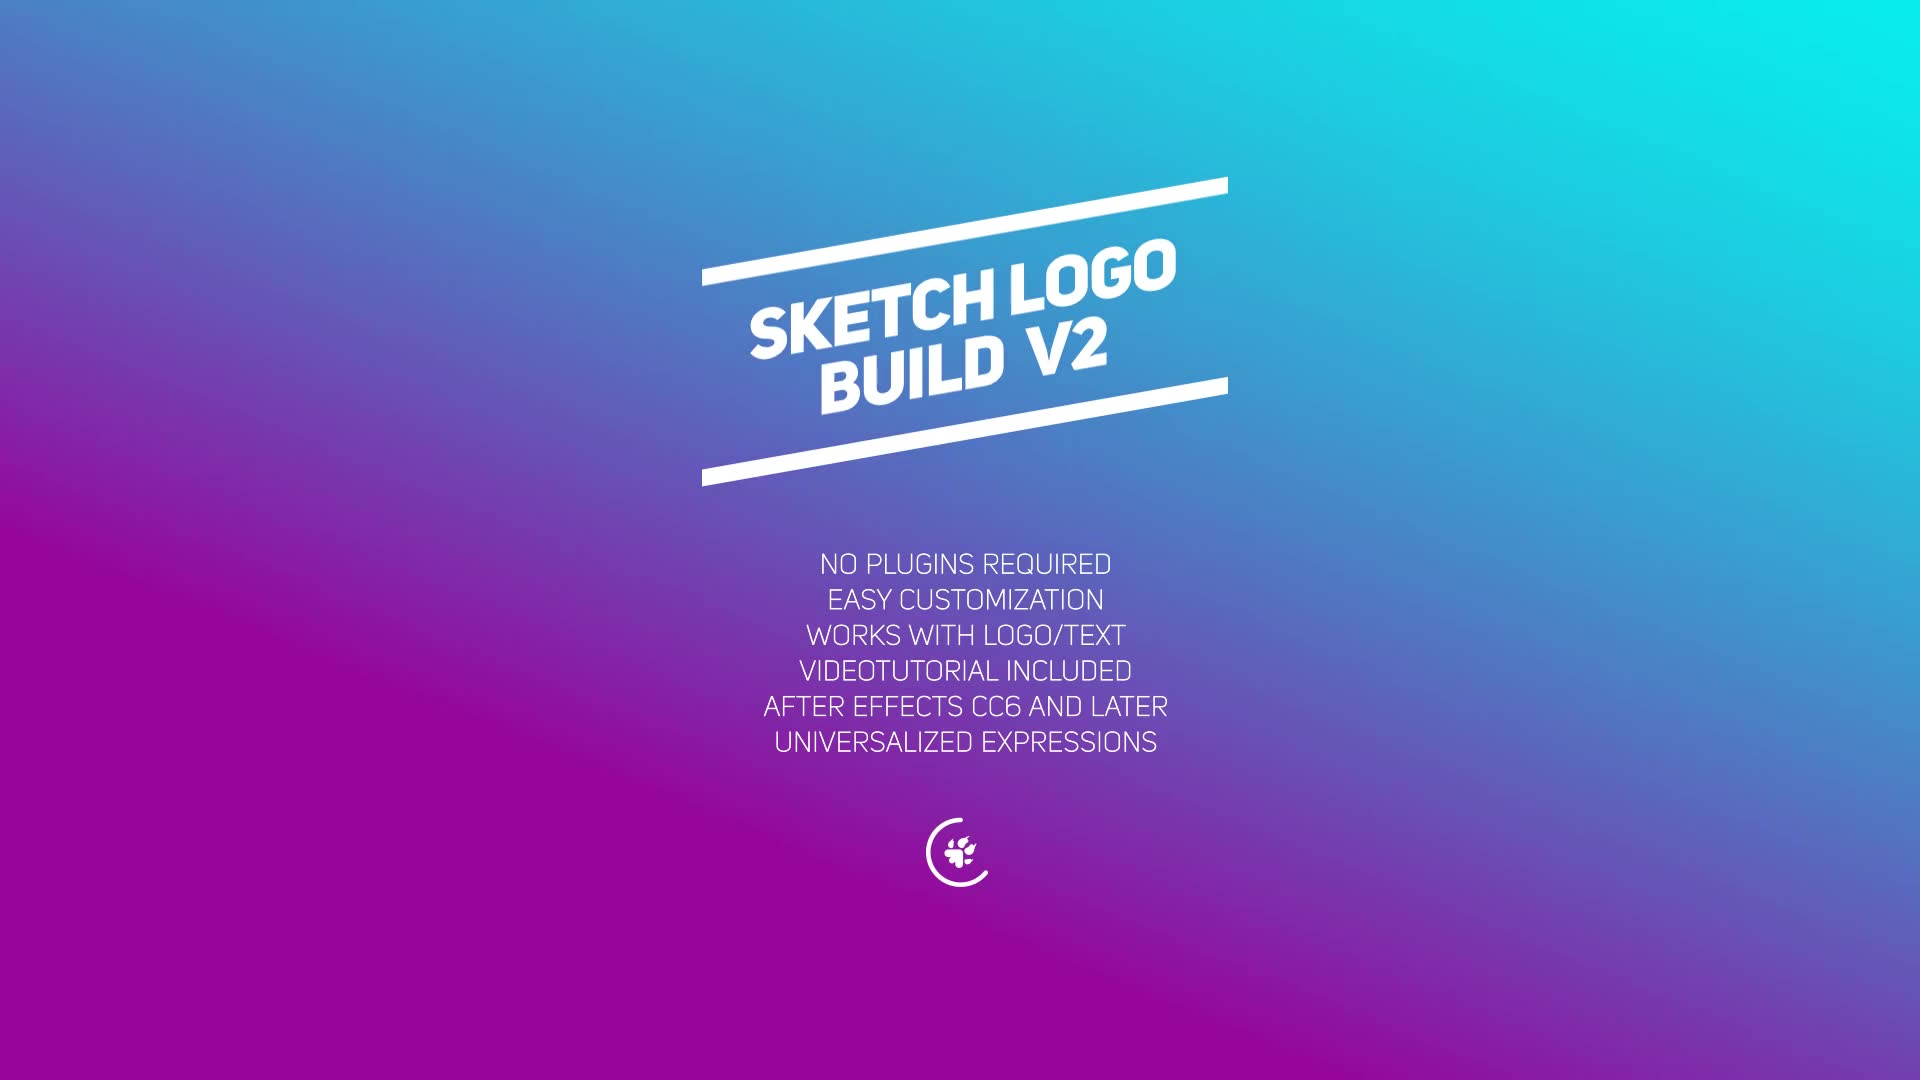 Sketch Logo Build v2 Videohive 26403283 After Effects Image 2